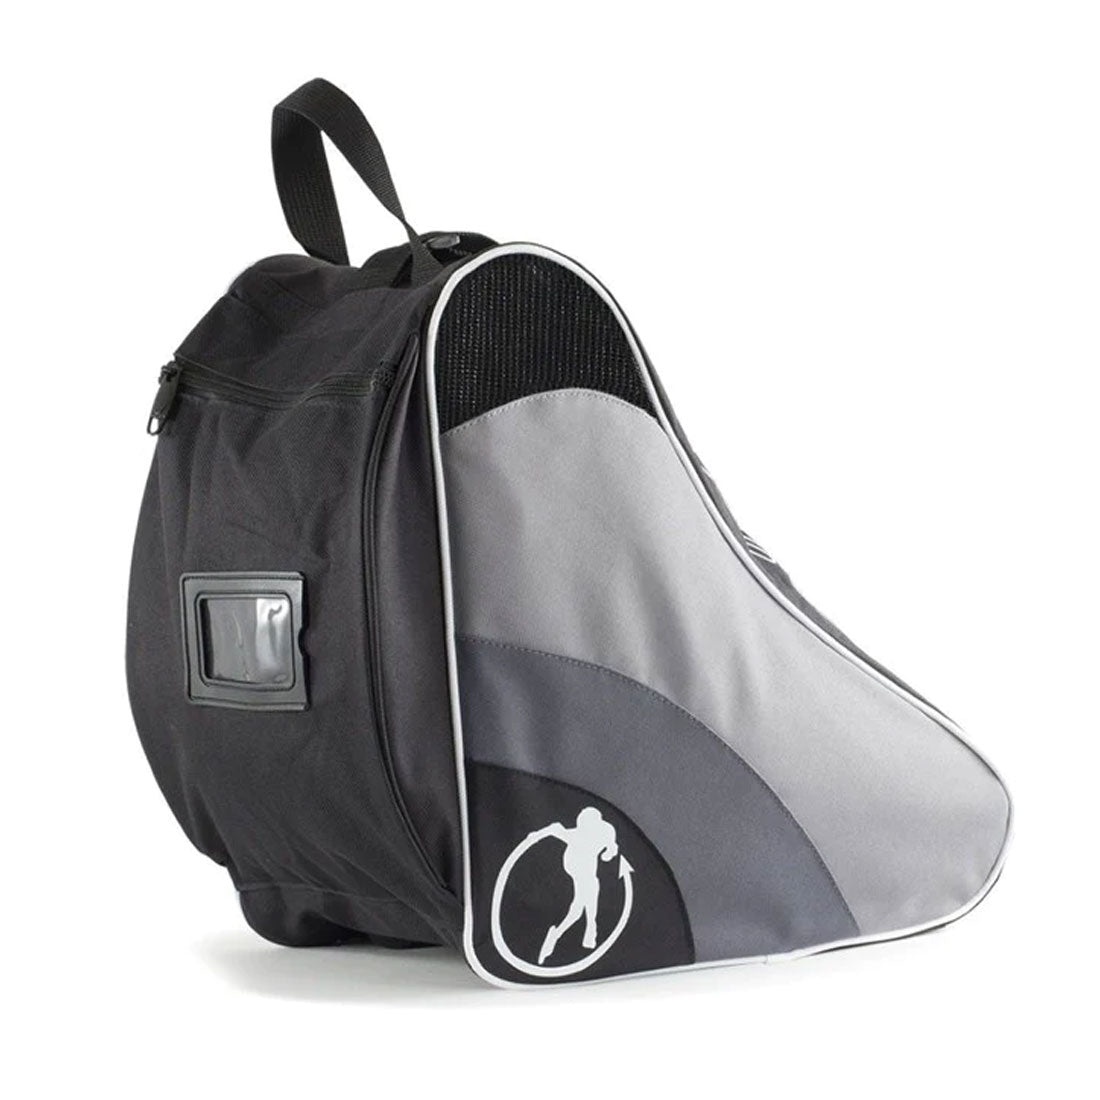 SFR Skate Bag V2 - Black Bags and Backpacks